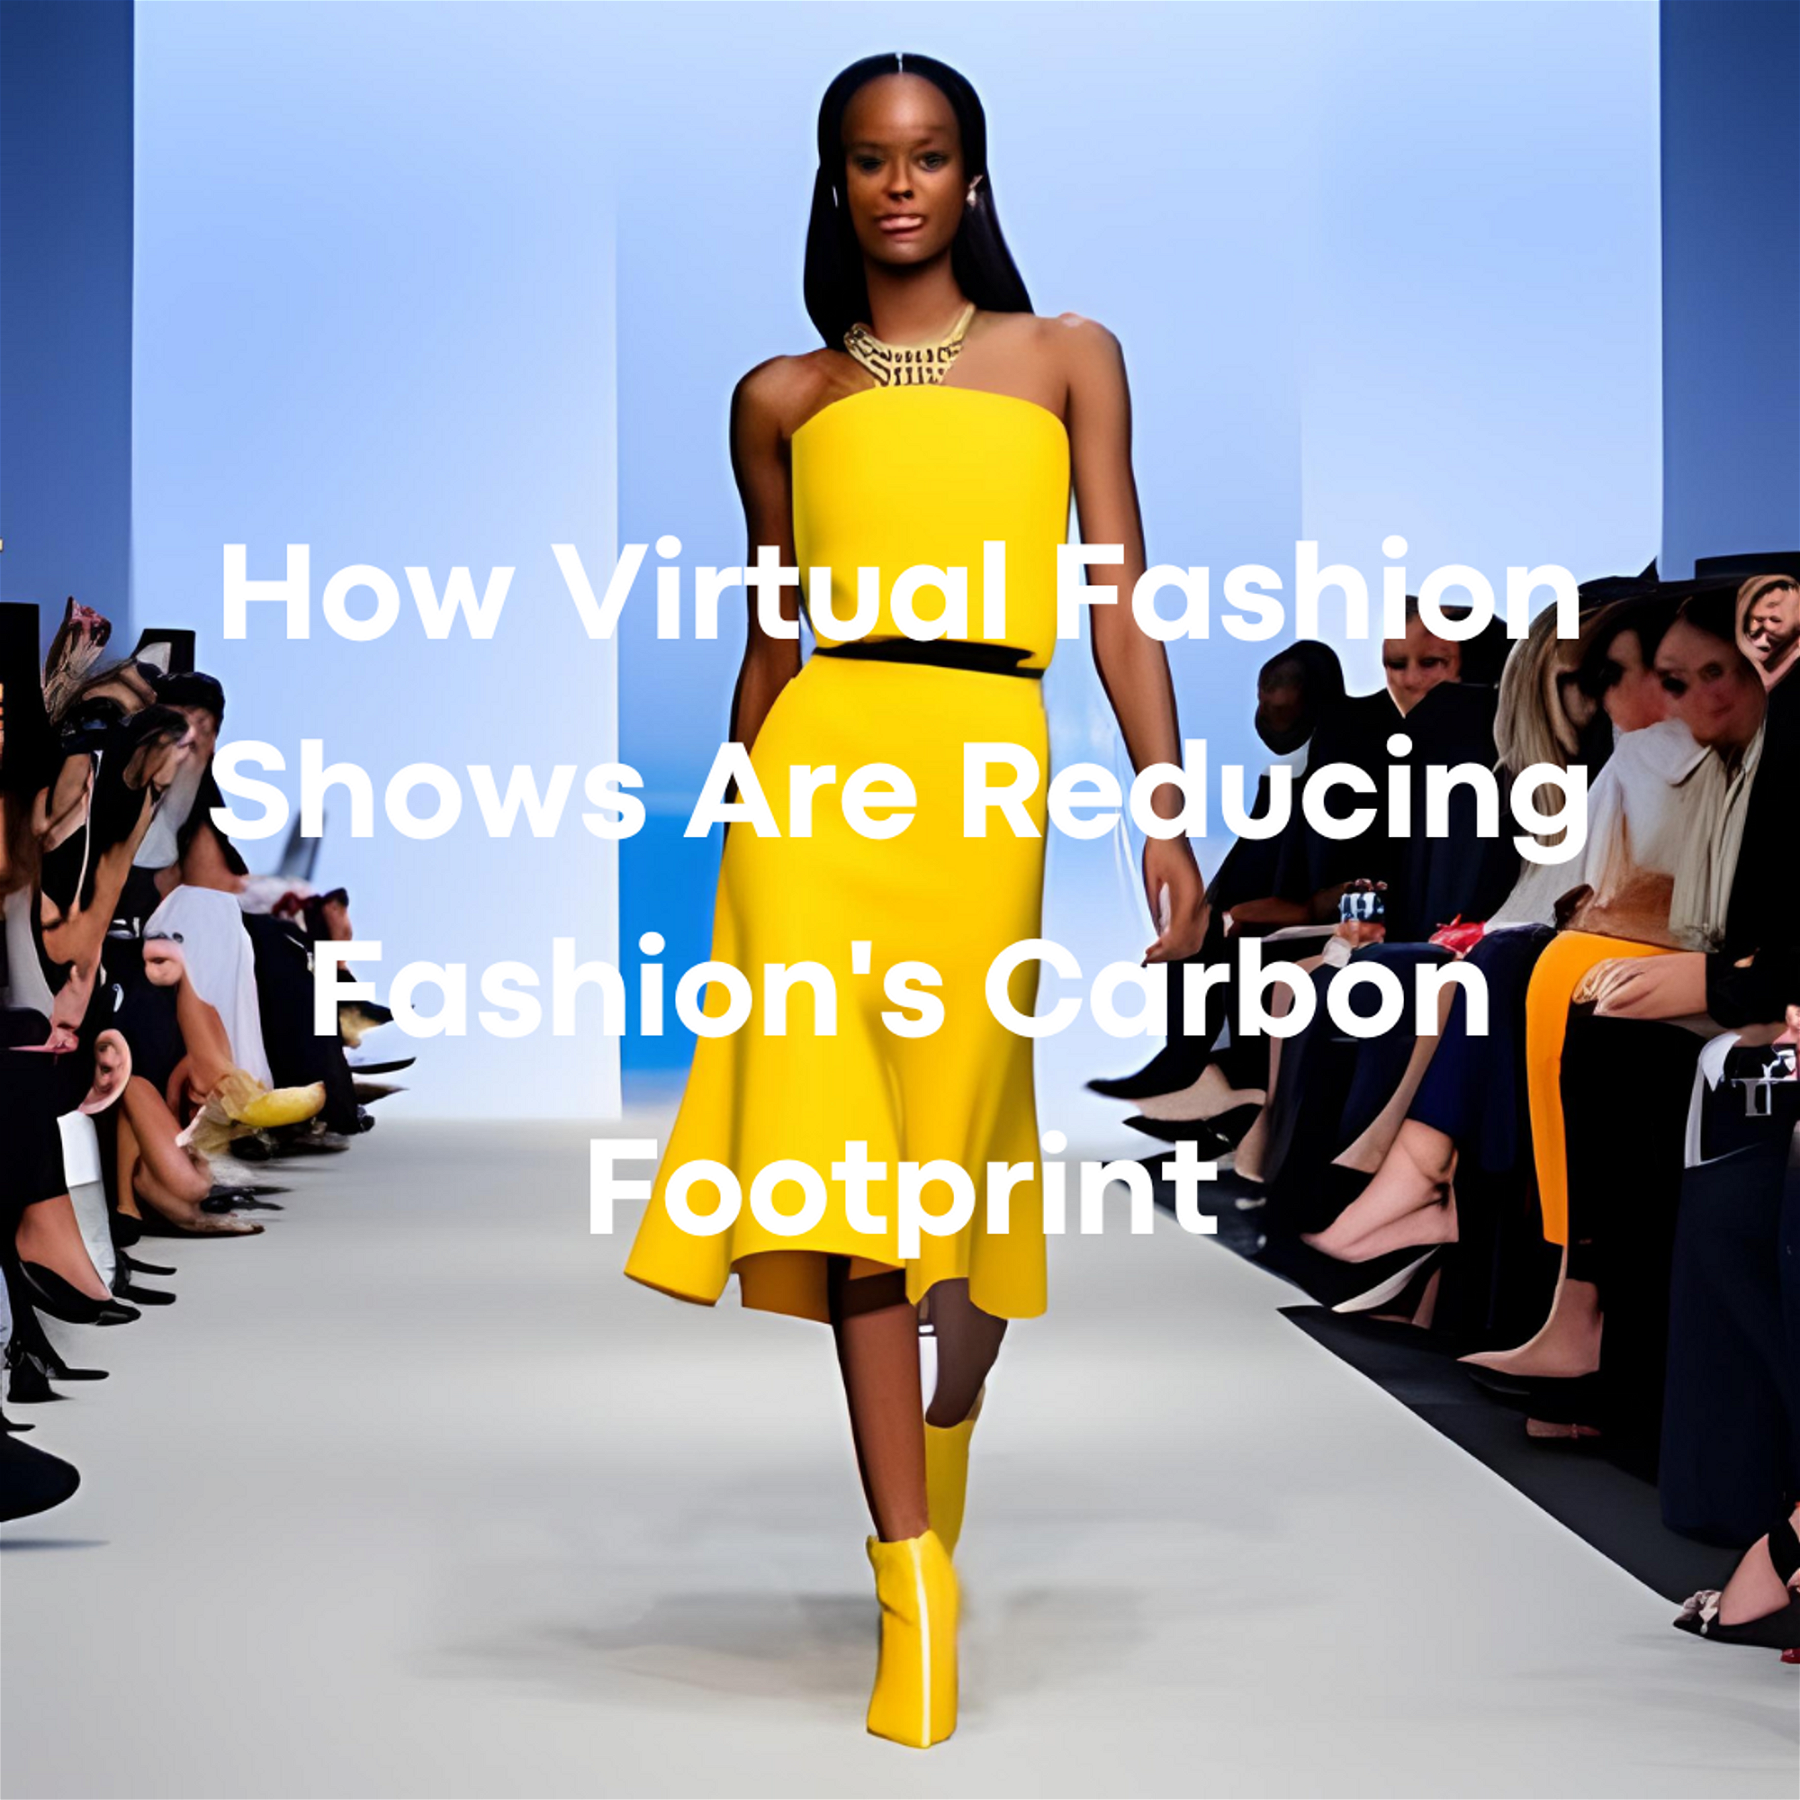 How Virtual Fashion Shows Are Reducing Fashion's Carbon Footprint